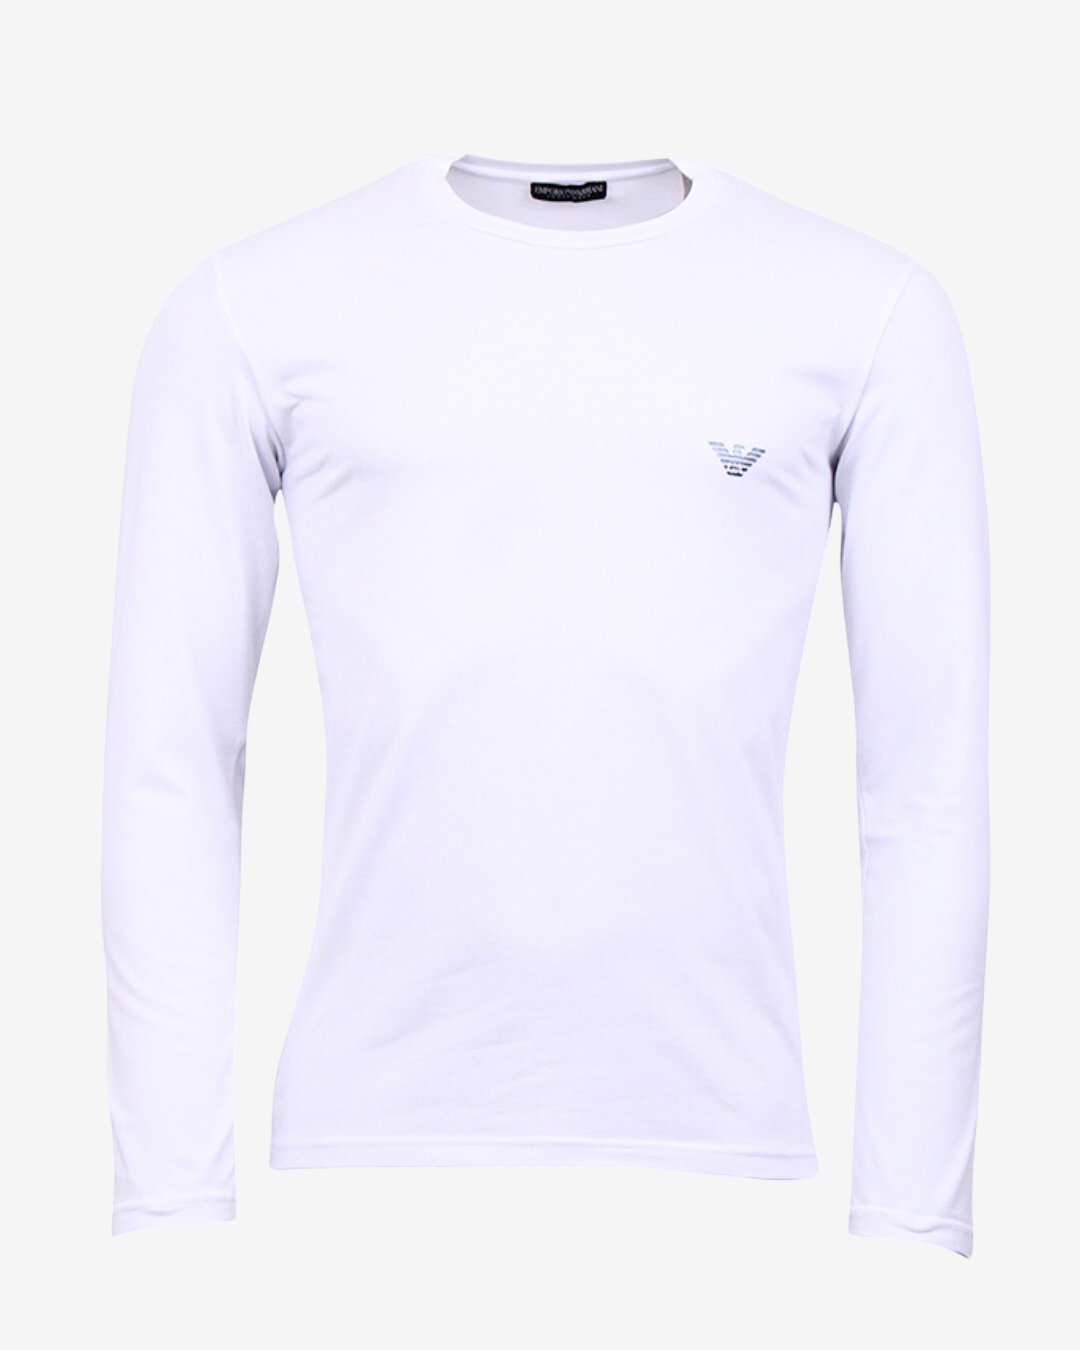 Se Armani Langærmet shiny logo t-shirt - Hvid - Str. S - Modish.dk hos Modish.dk